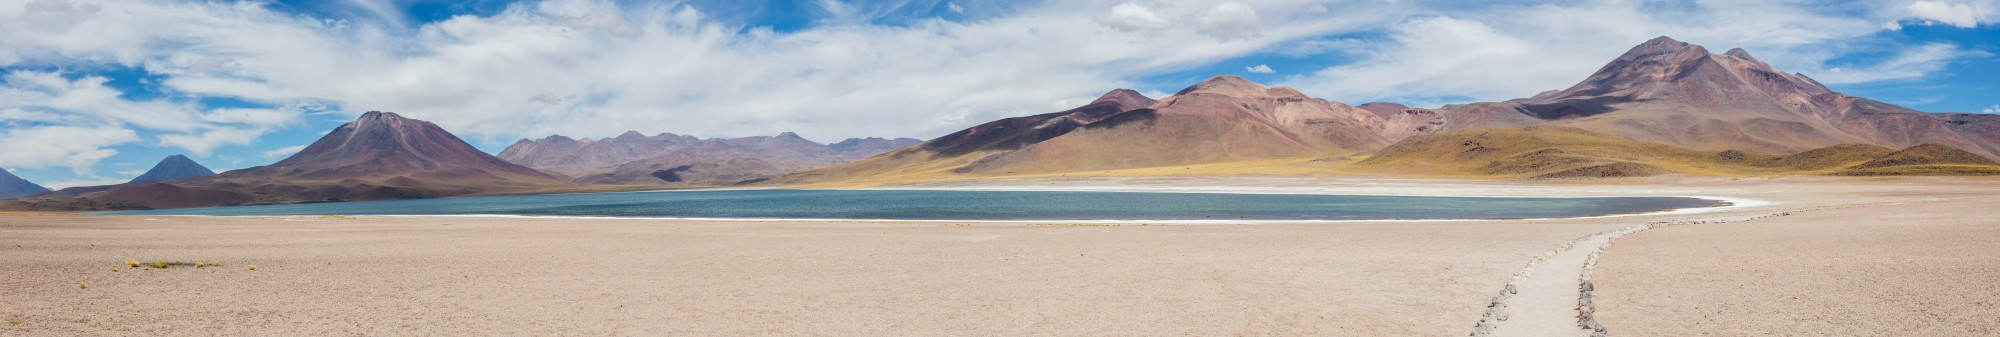 Laguna Miscanti, Chile, 2016-02-08, DD 25-30 PAN